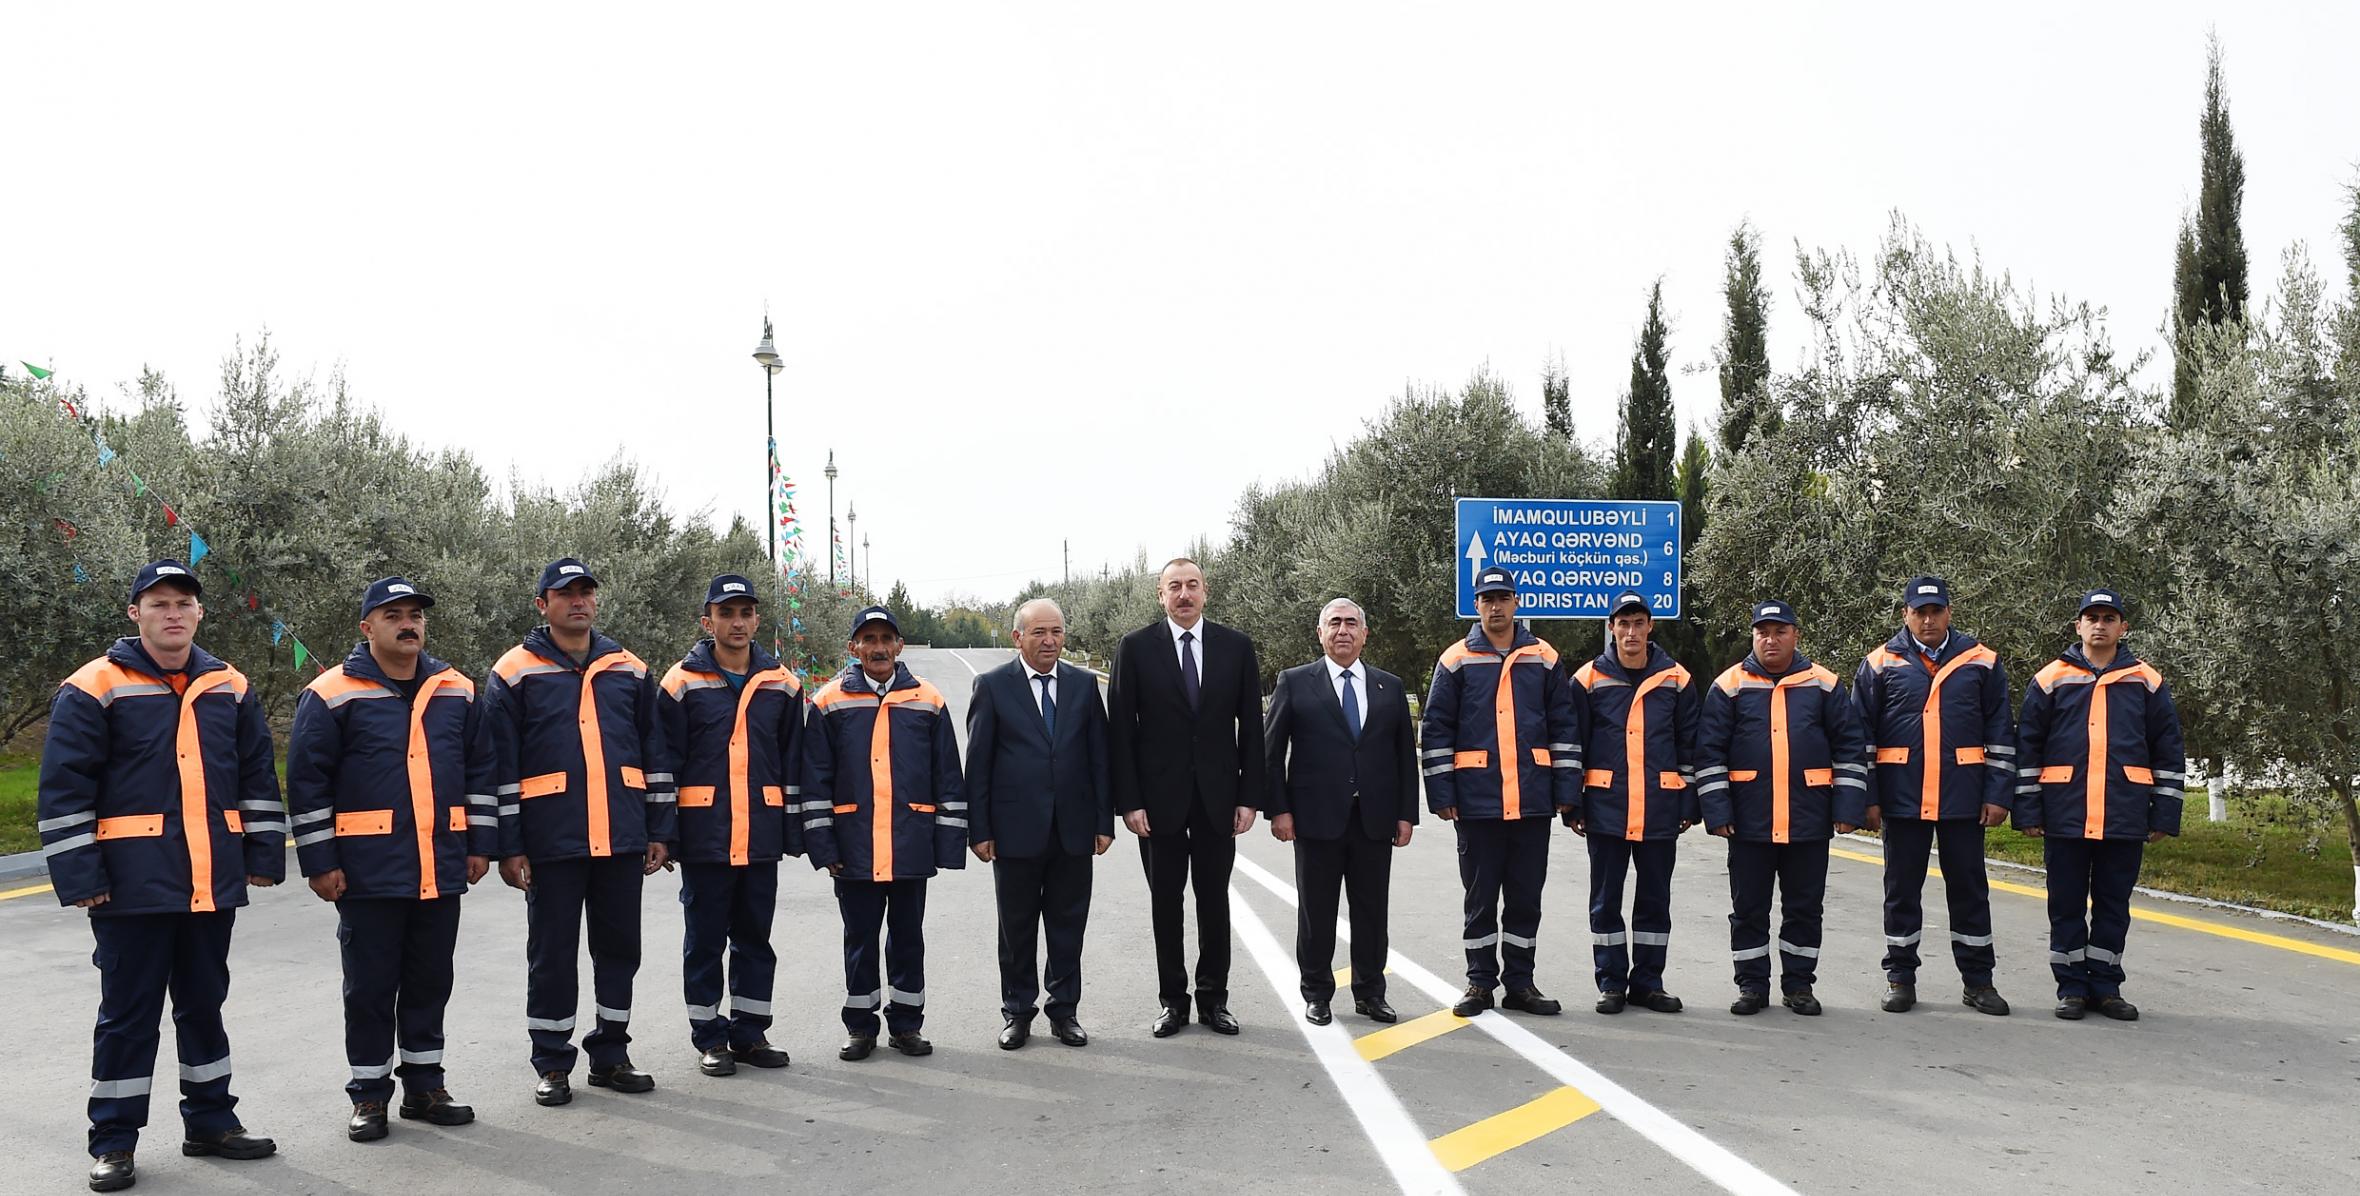 Ilham Aliyev inaugurated Guzanli-Imamgulubayli-Orta Garvand-Khindiristan highway in Aghdam